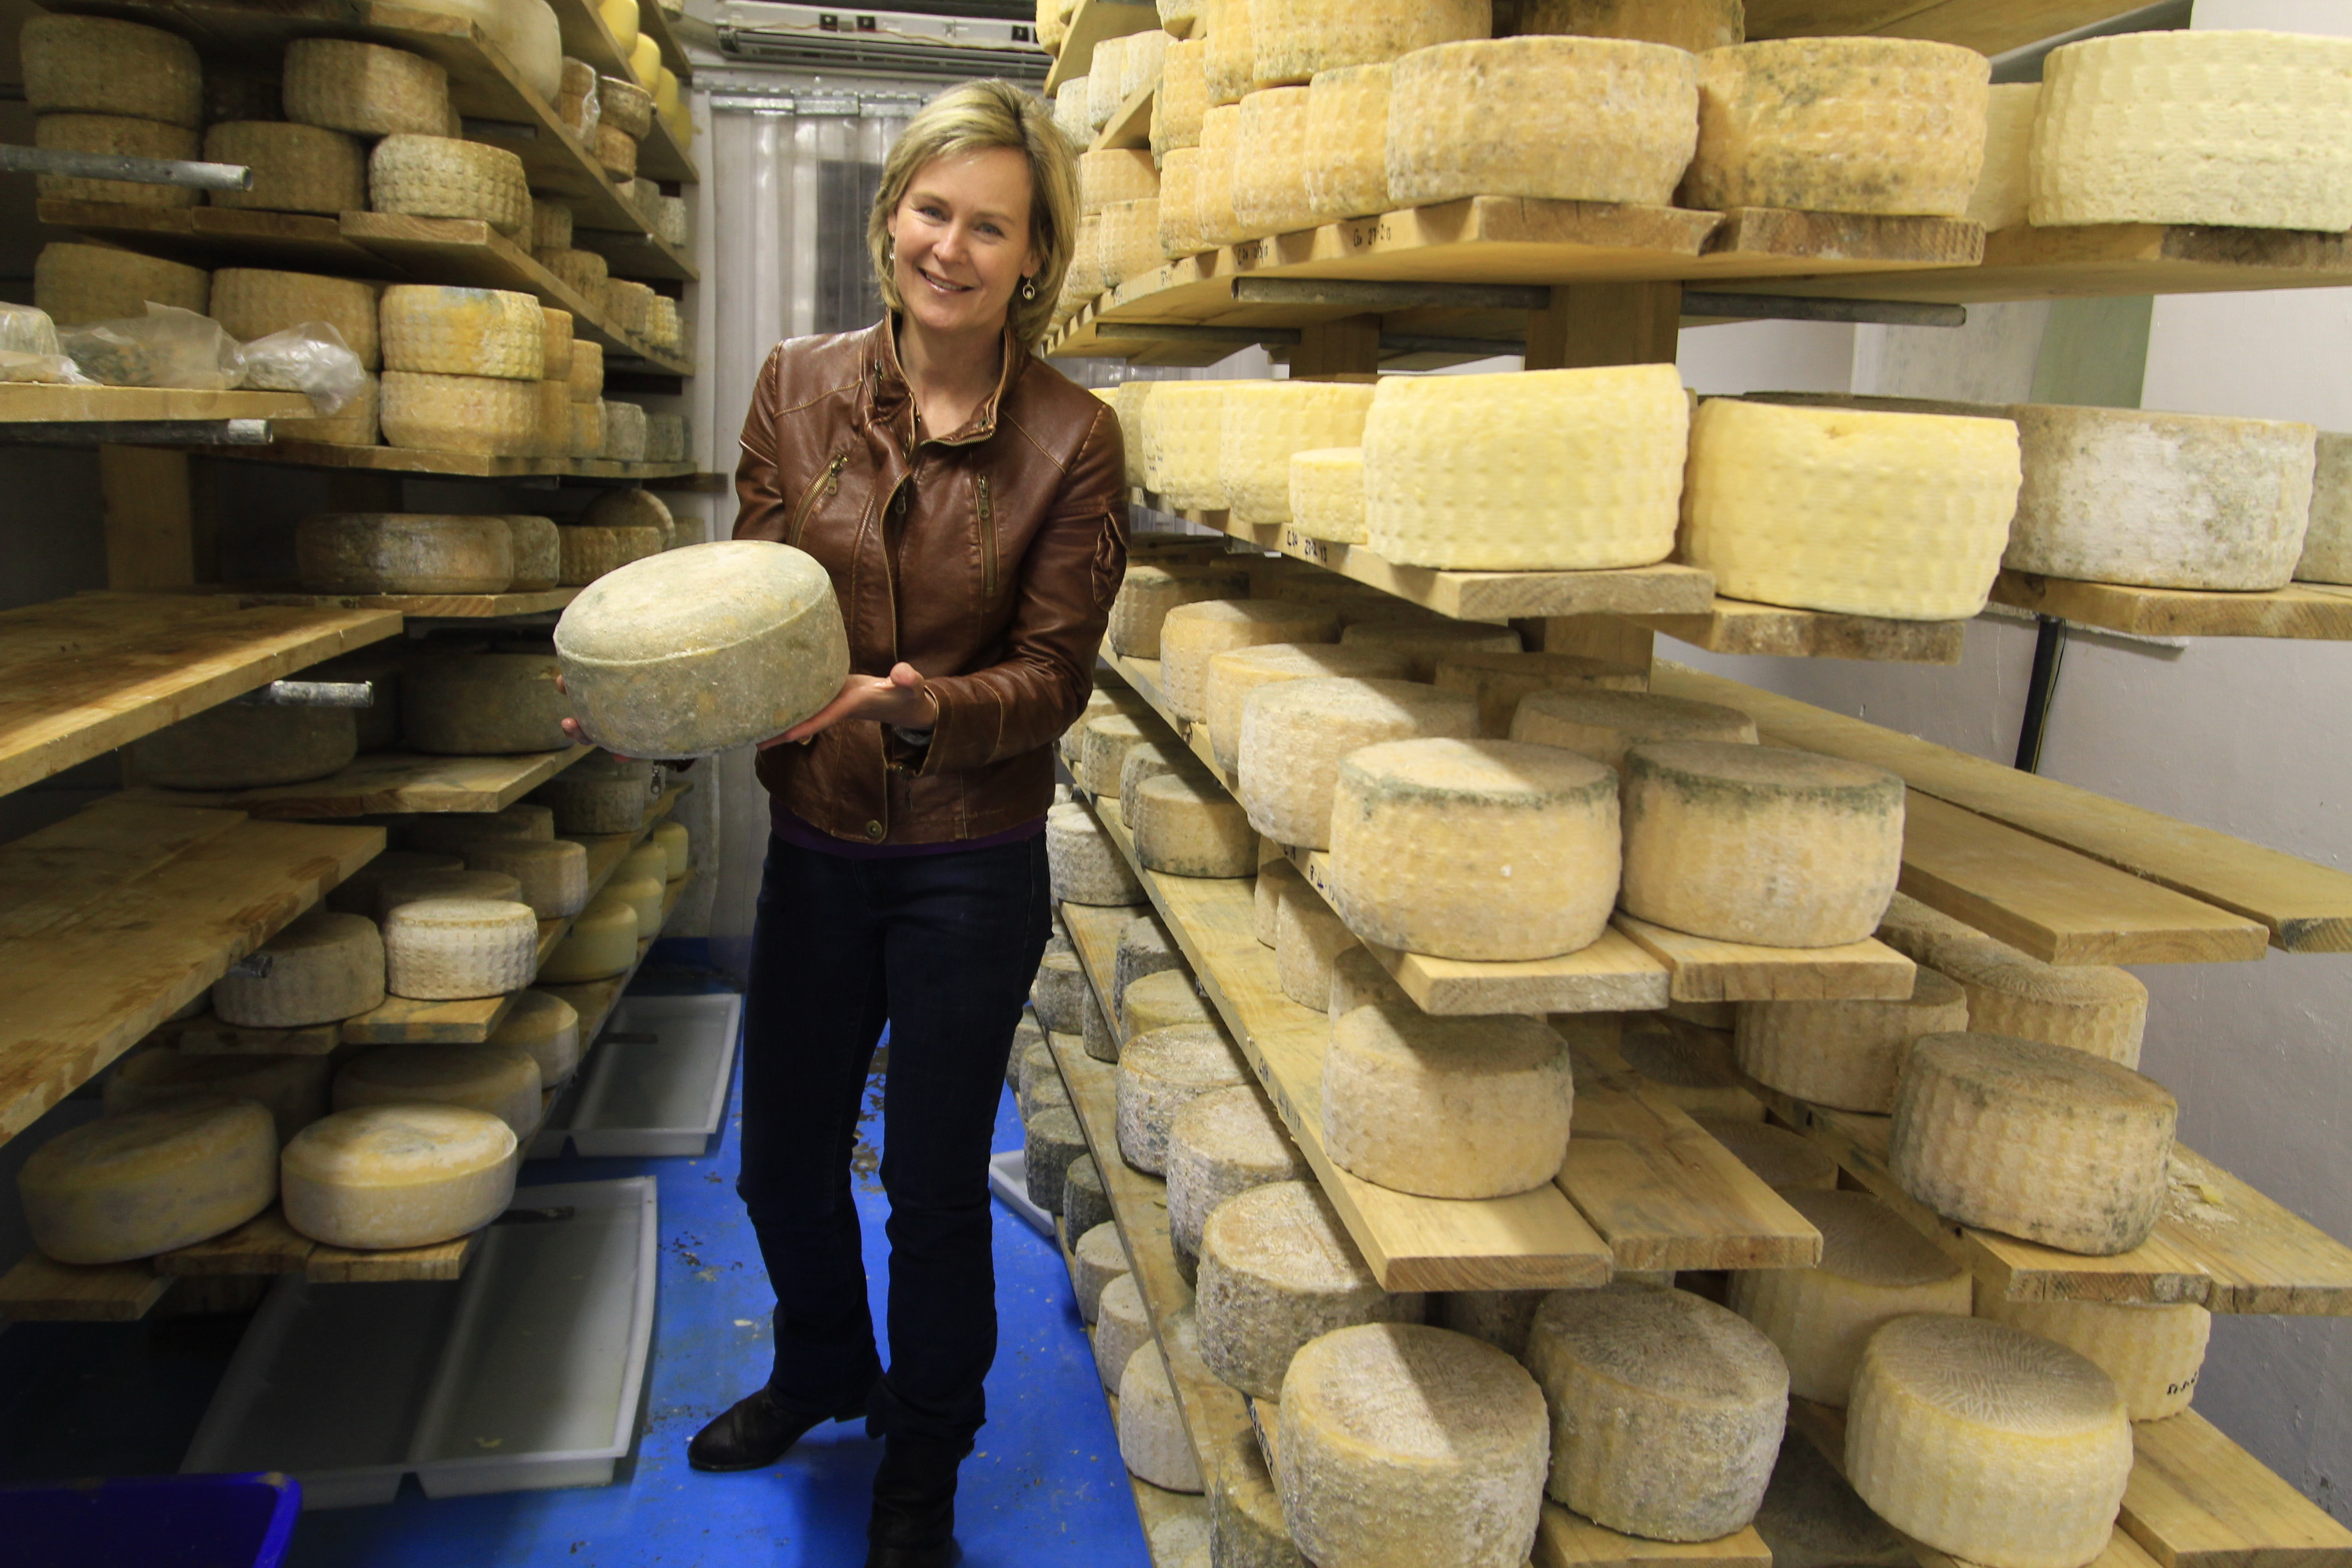 Francy in her storeroom where the artisanal cheeses slowly mature. Image: Chris Marais